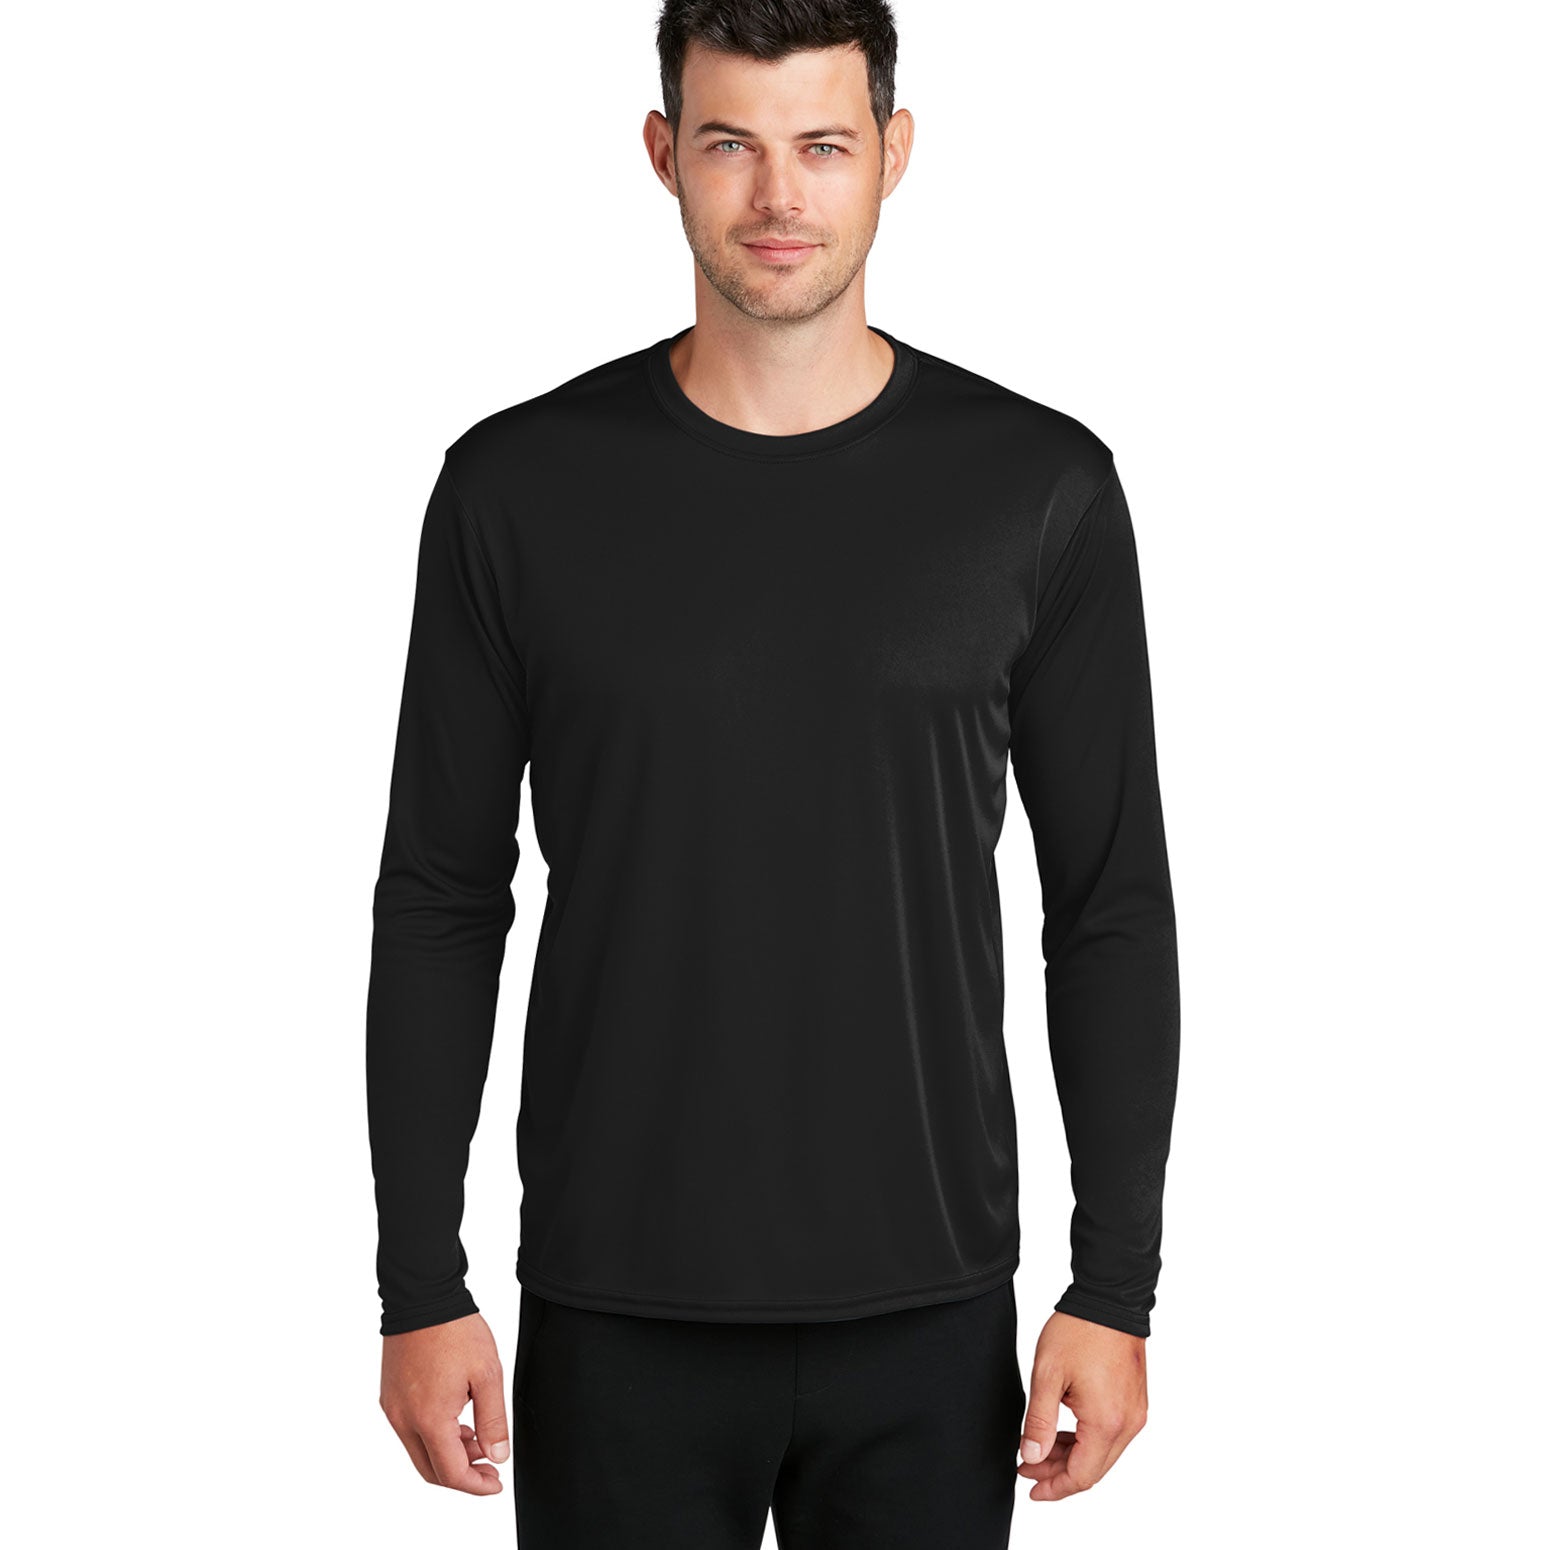 PIQIDIG Big and Tall Mens T Shirts - Long Sleeve Dri Fit Fishing Shirt  Black 2XL